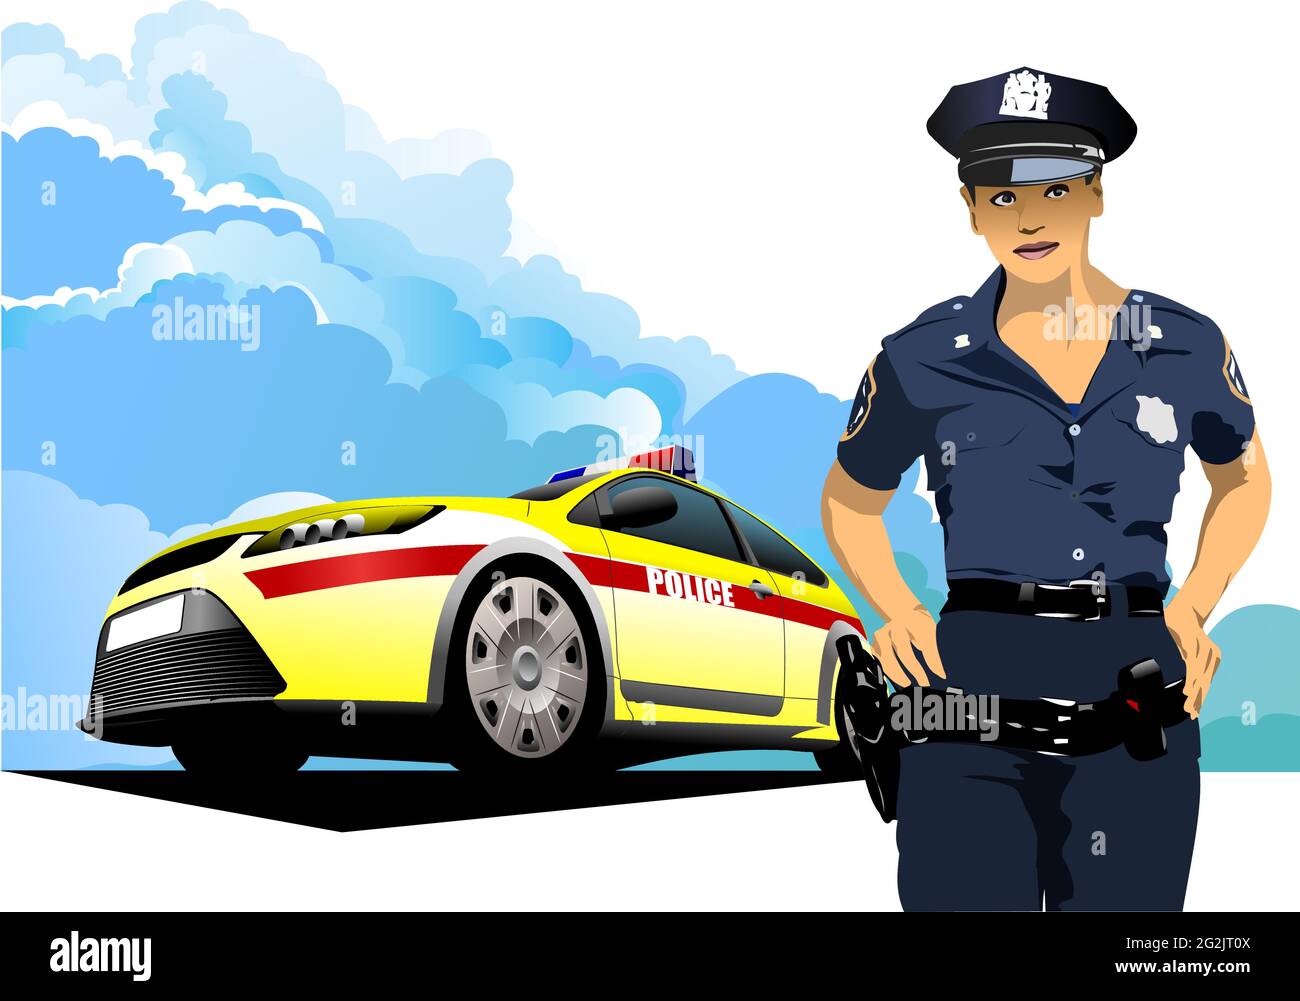 493 Voiture De Police Illustrations - Getty Images